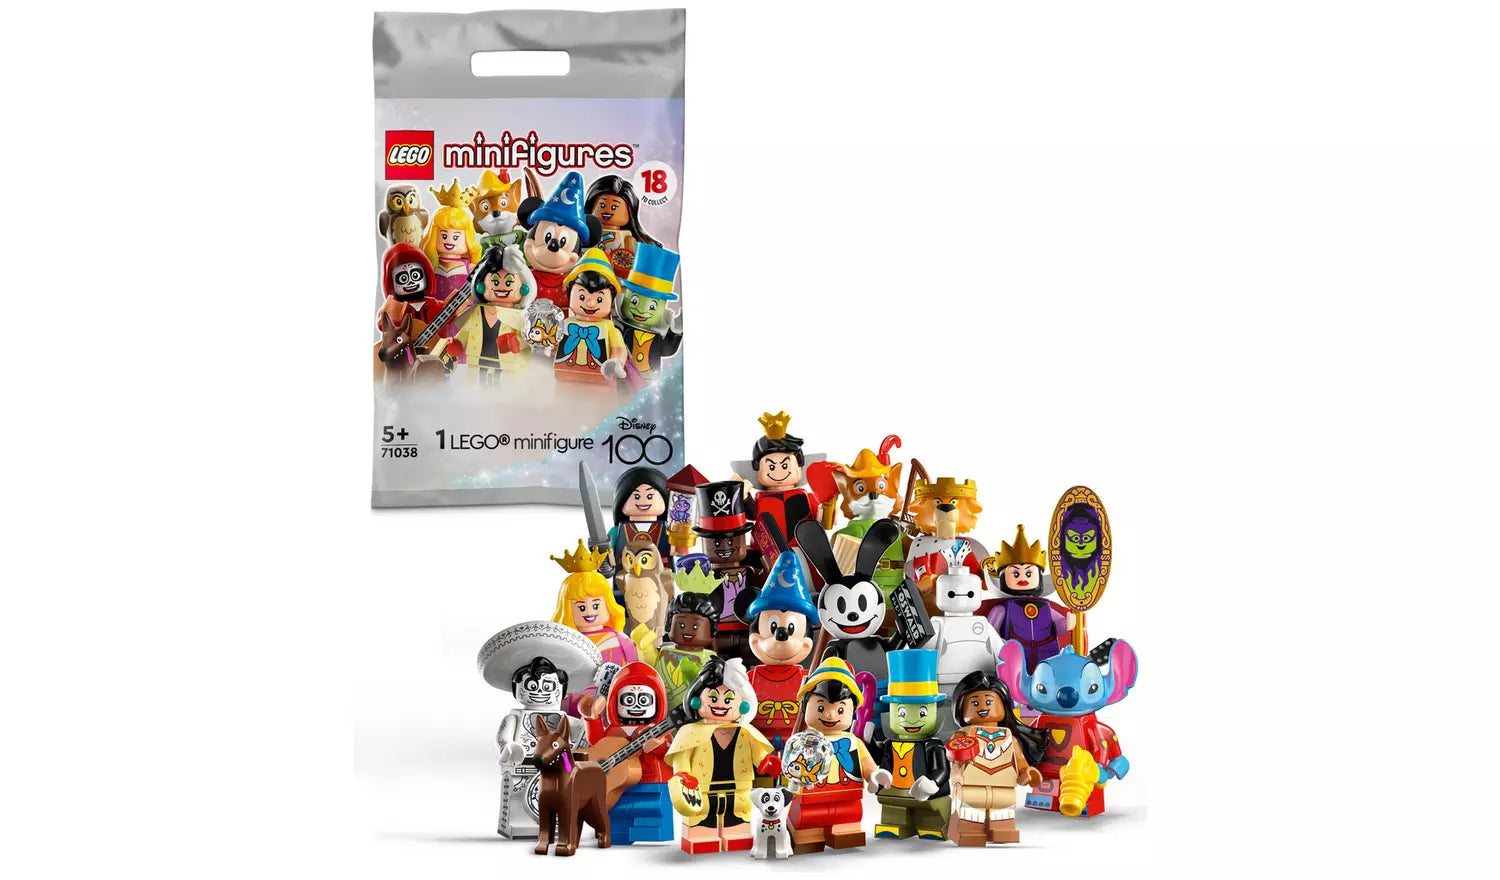 LEGO Minifigures Disney 100 71038 by LEGO Systems Inc.